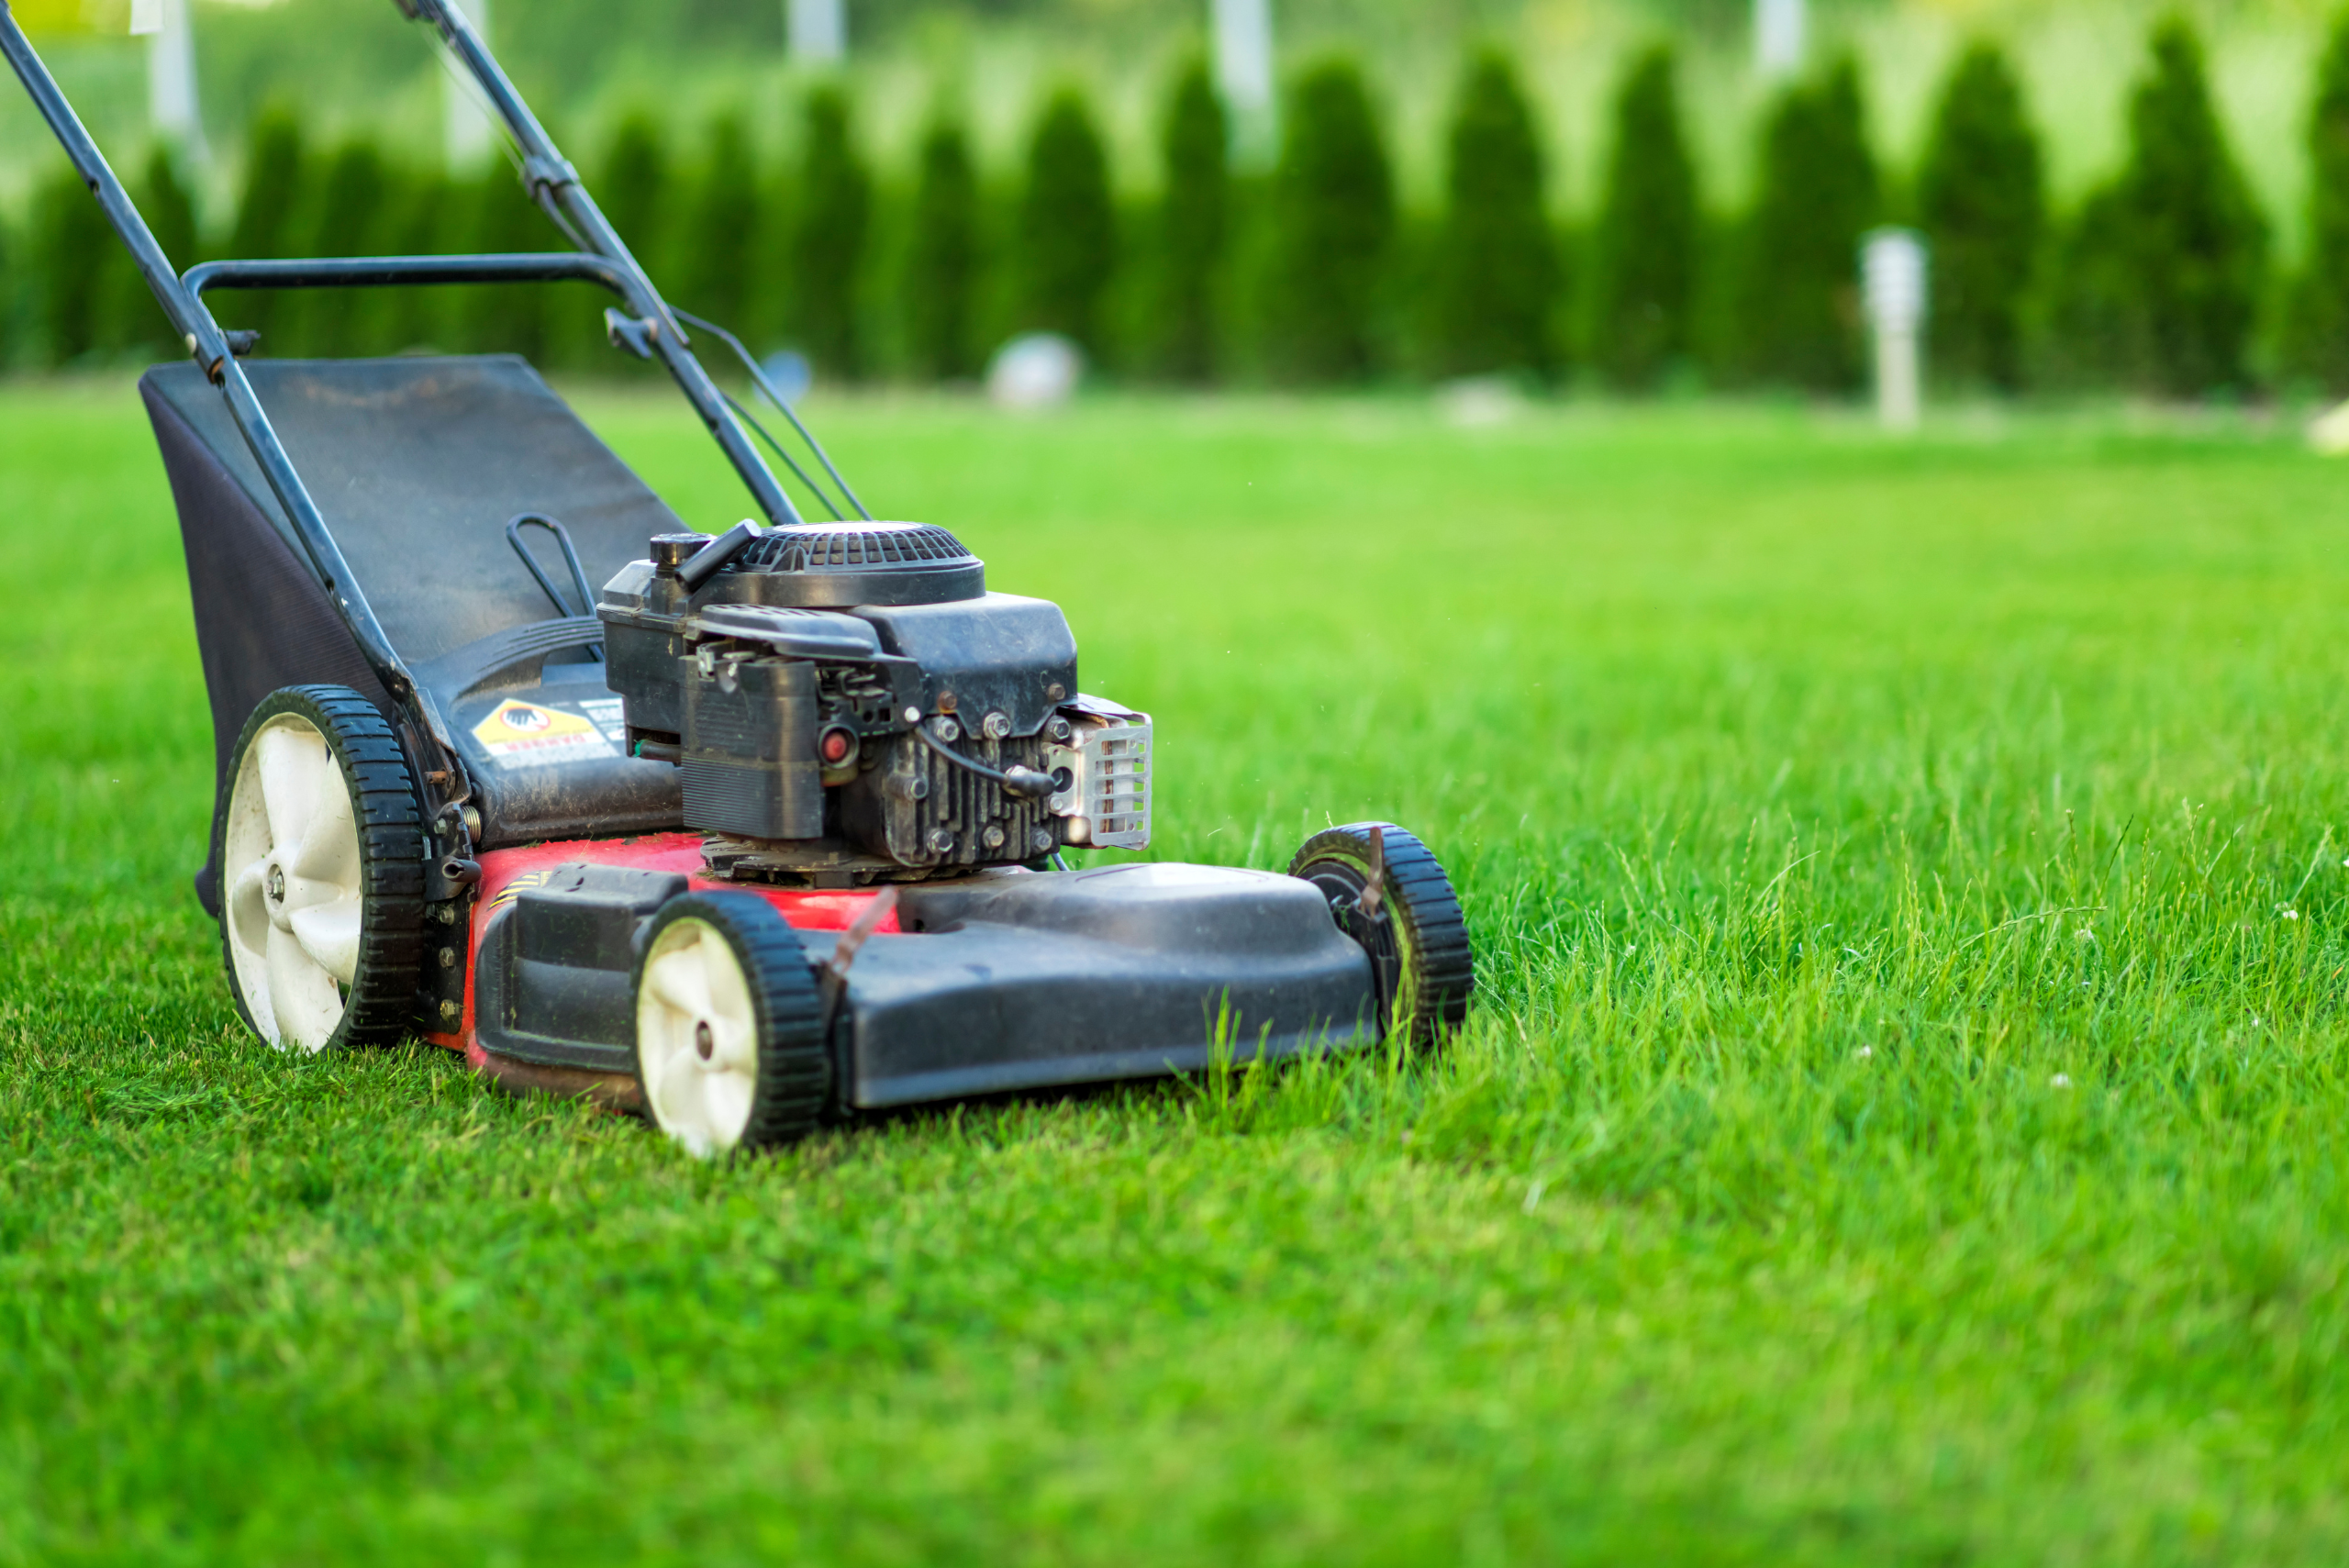 A lawn mower mowing grass.